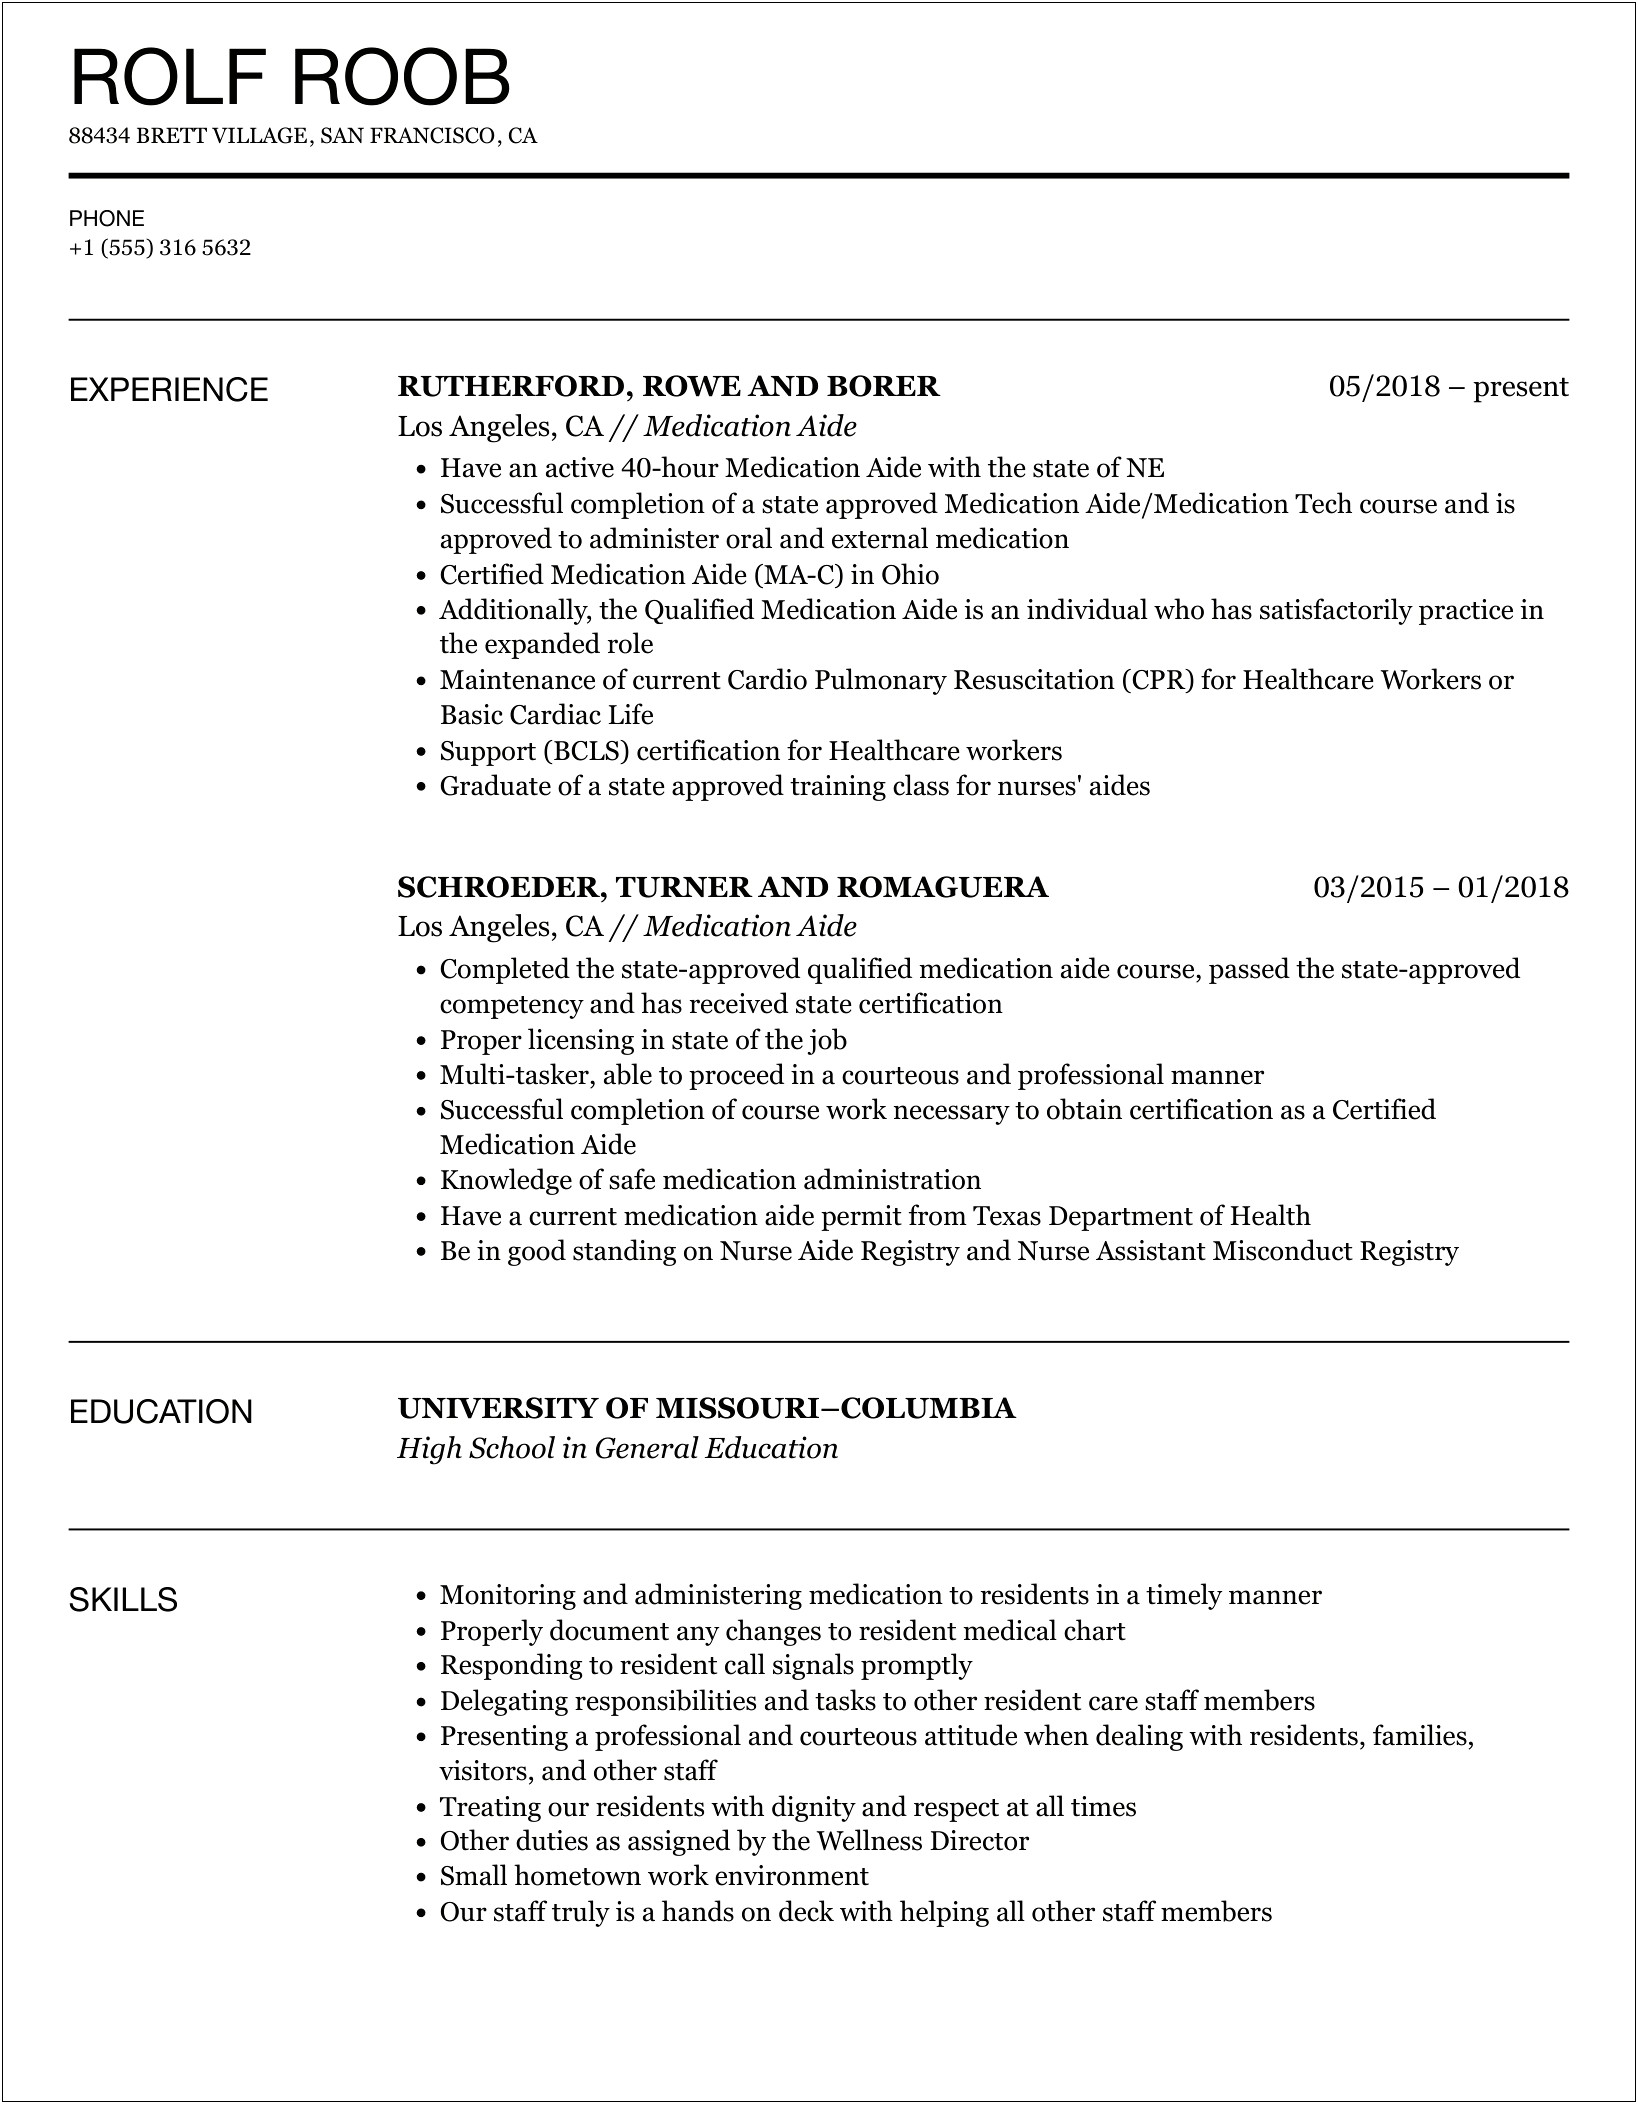 Certified Medication Aide Job Description For Resume